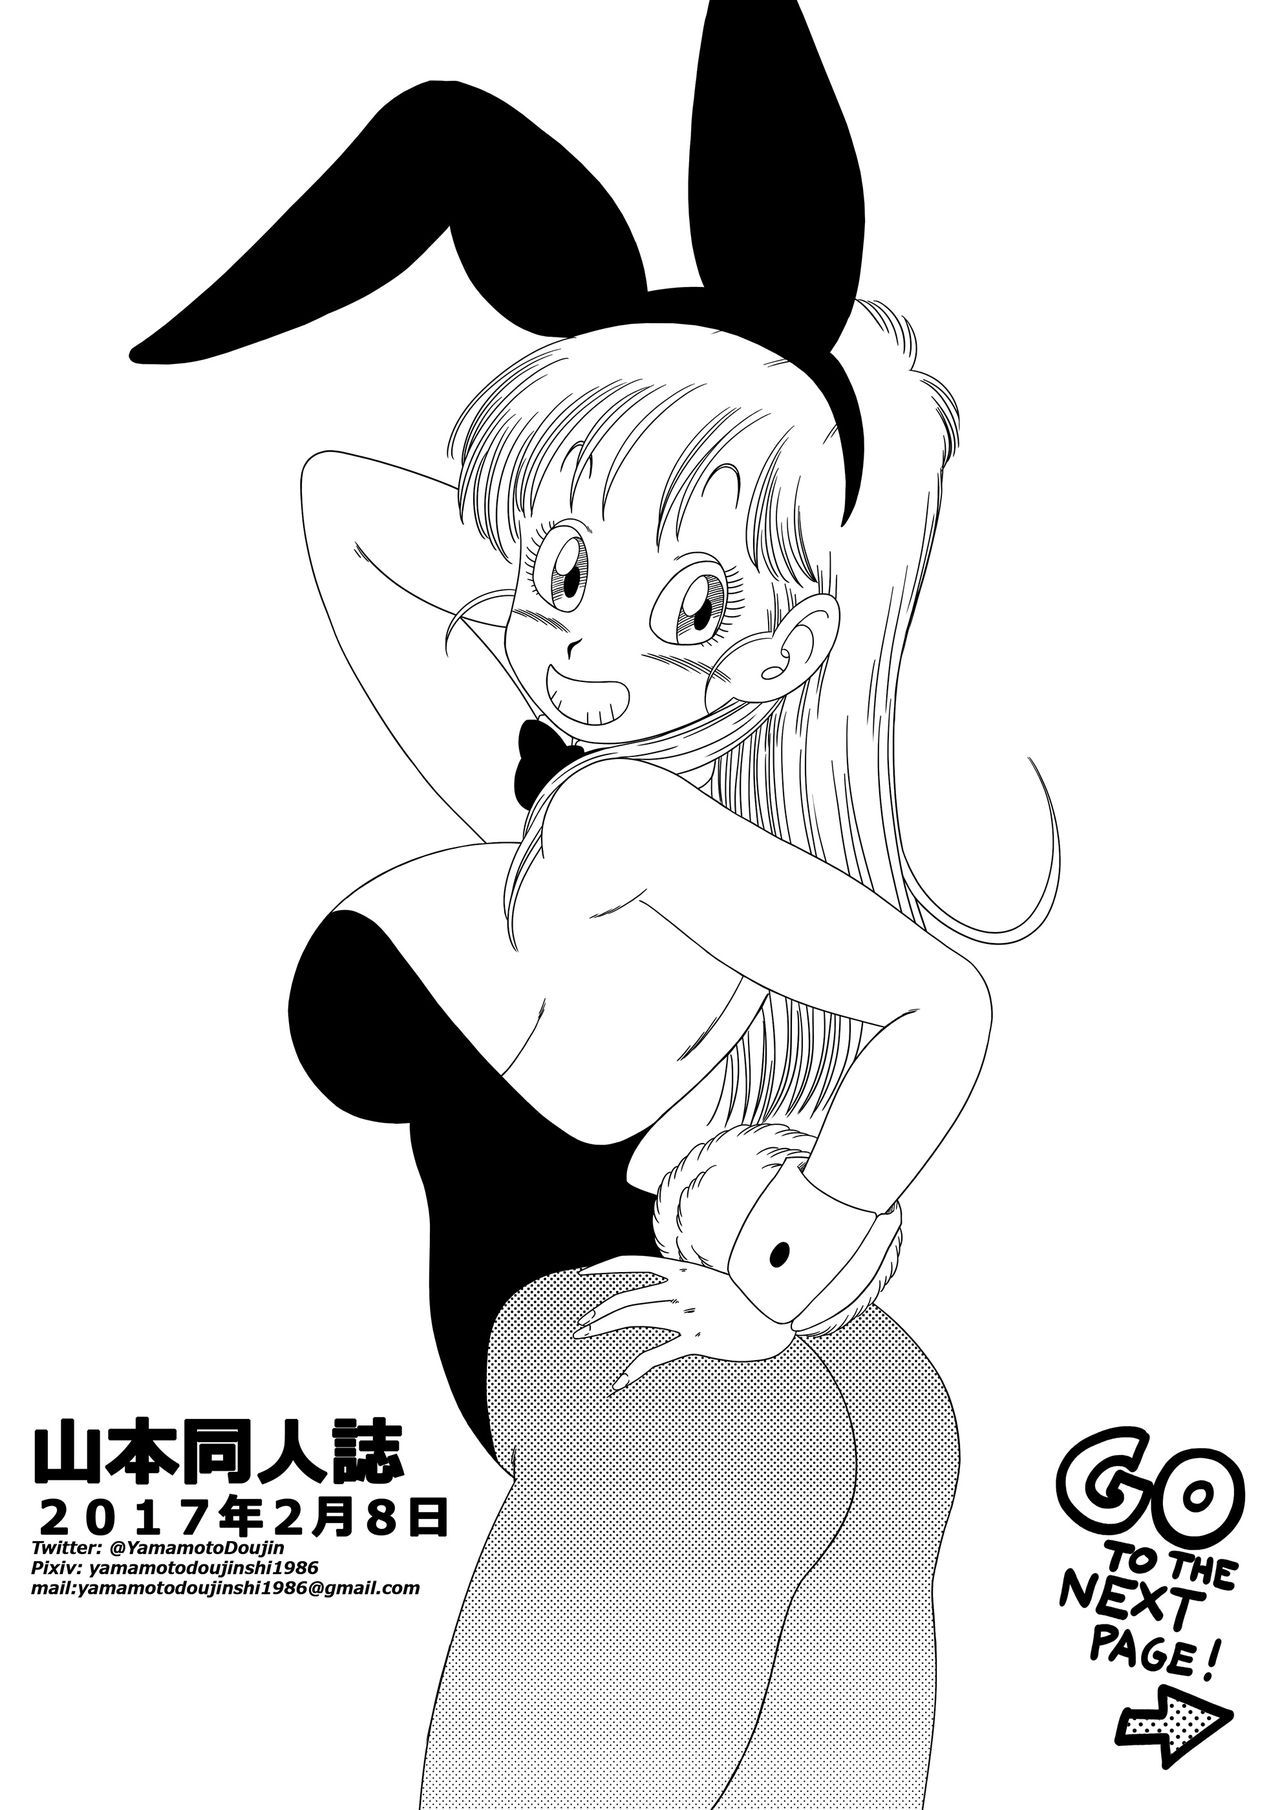 Bunny-Girl-Transformation-21.jpg